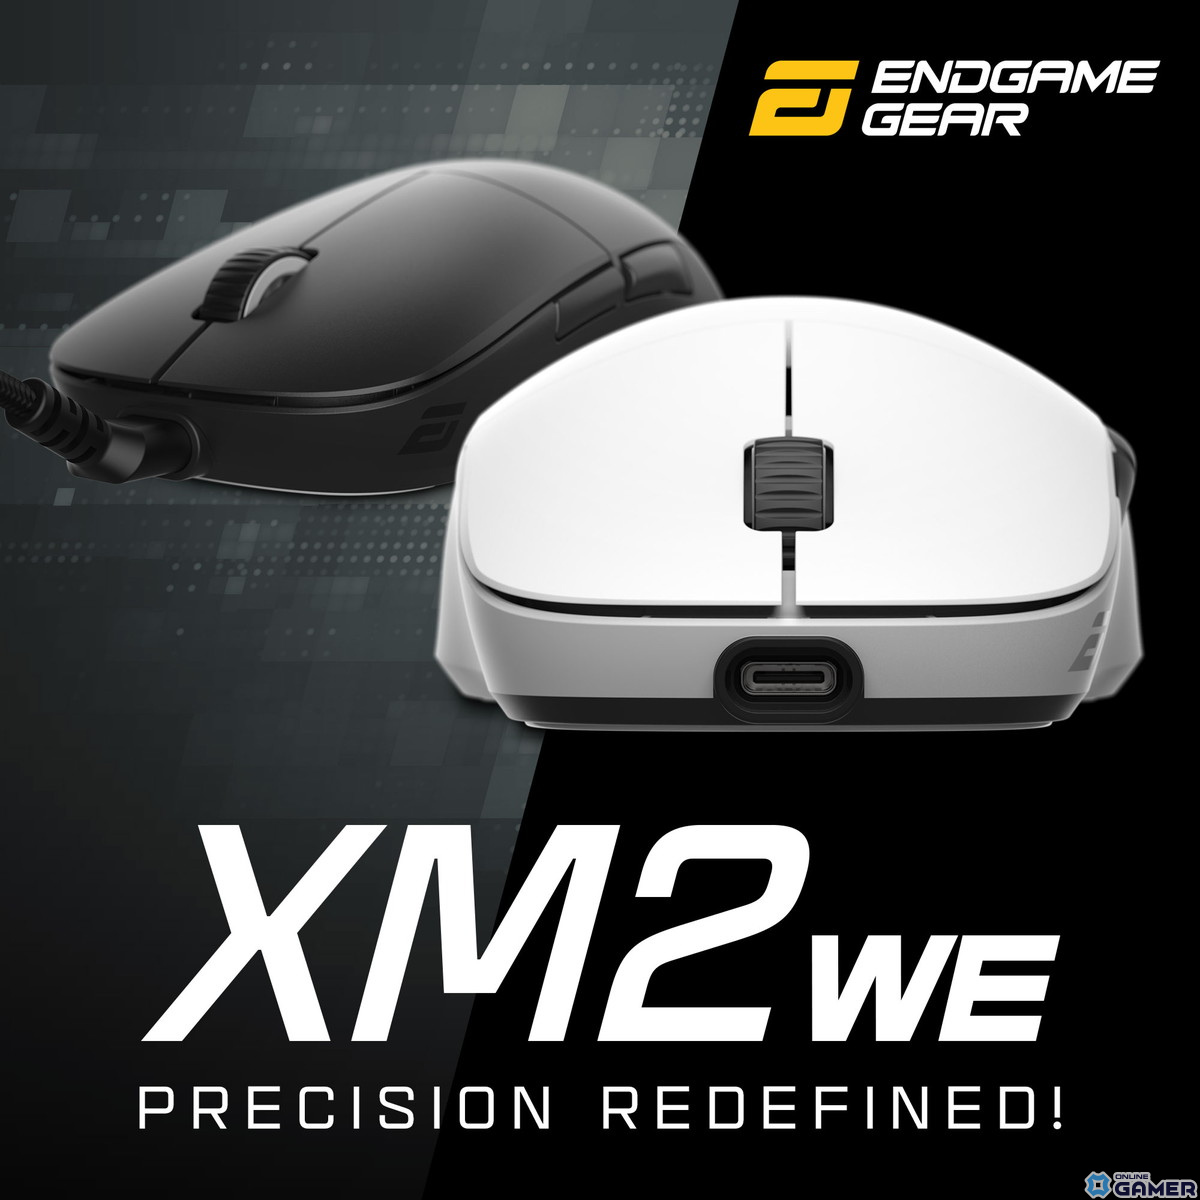 Endgame Gearから約63gの軽量ゲーミングマウス「XM2we」が発売―ワイヤレス接続可能なドングルや上向きコネクタ・ケーブルが付属の画像